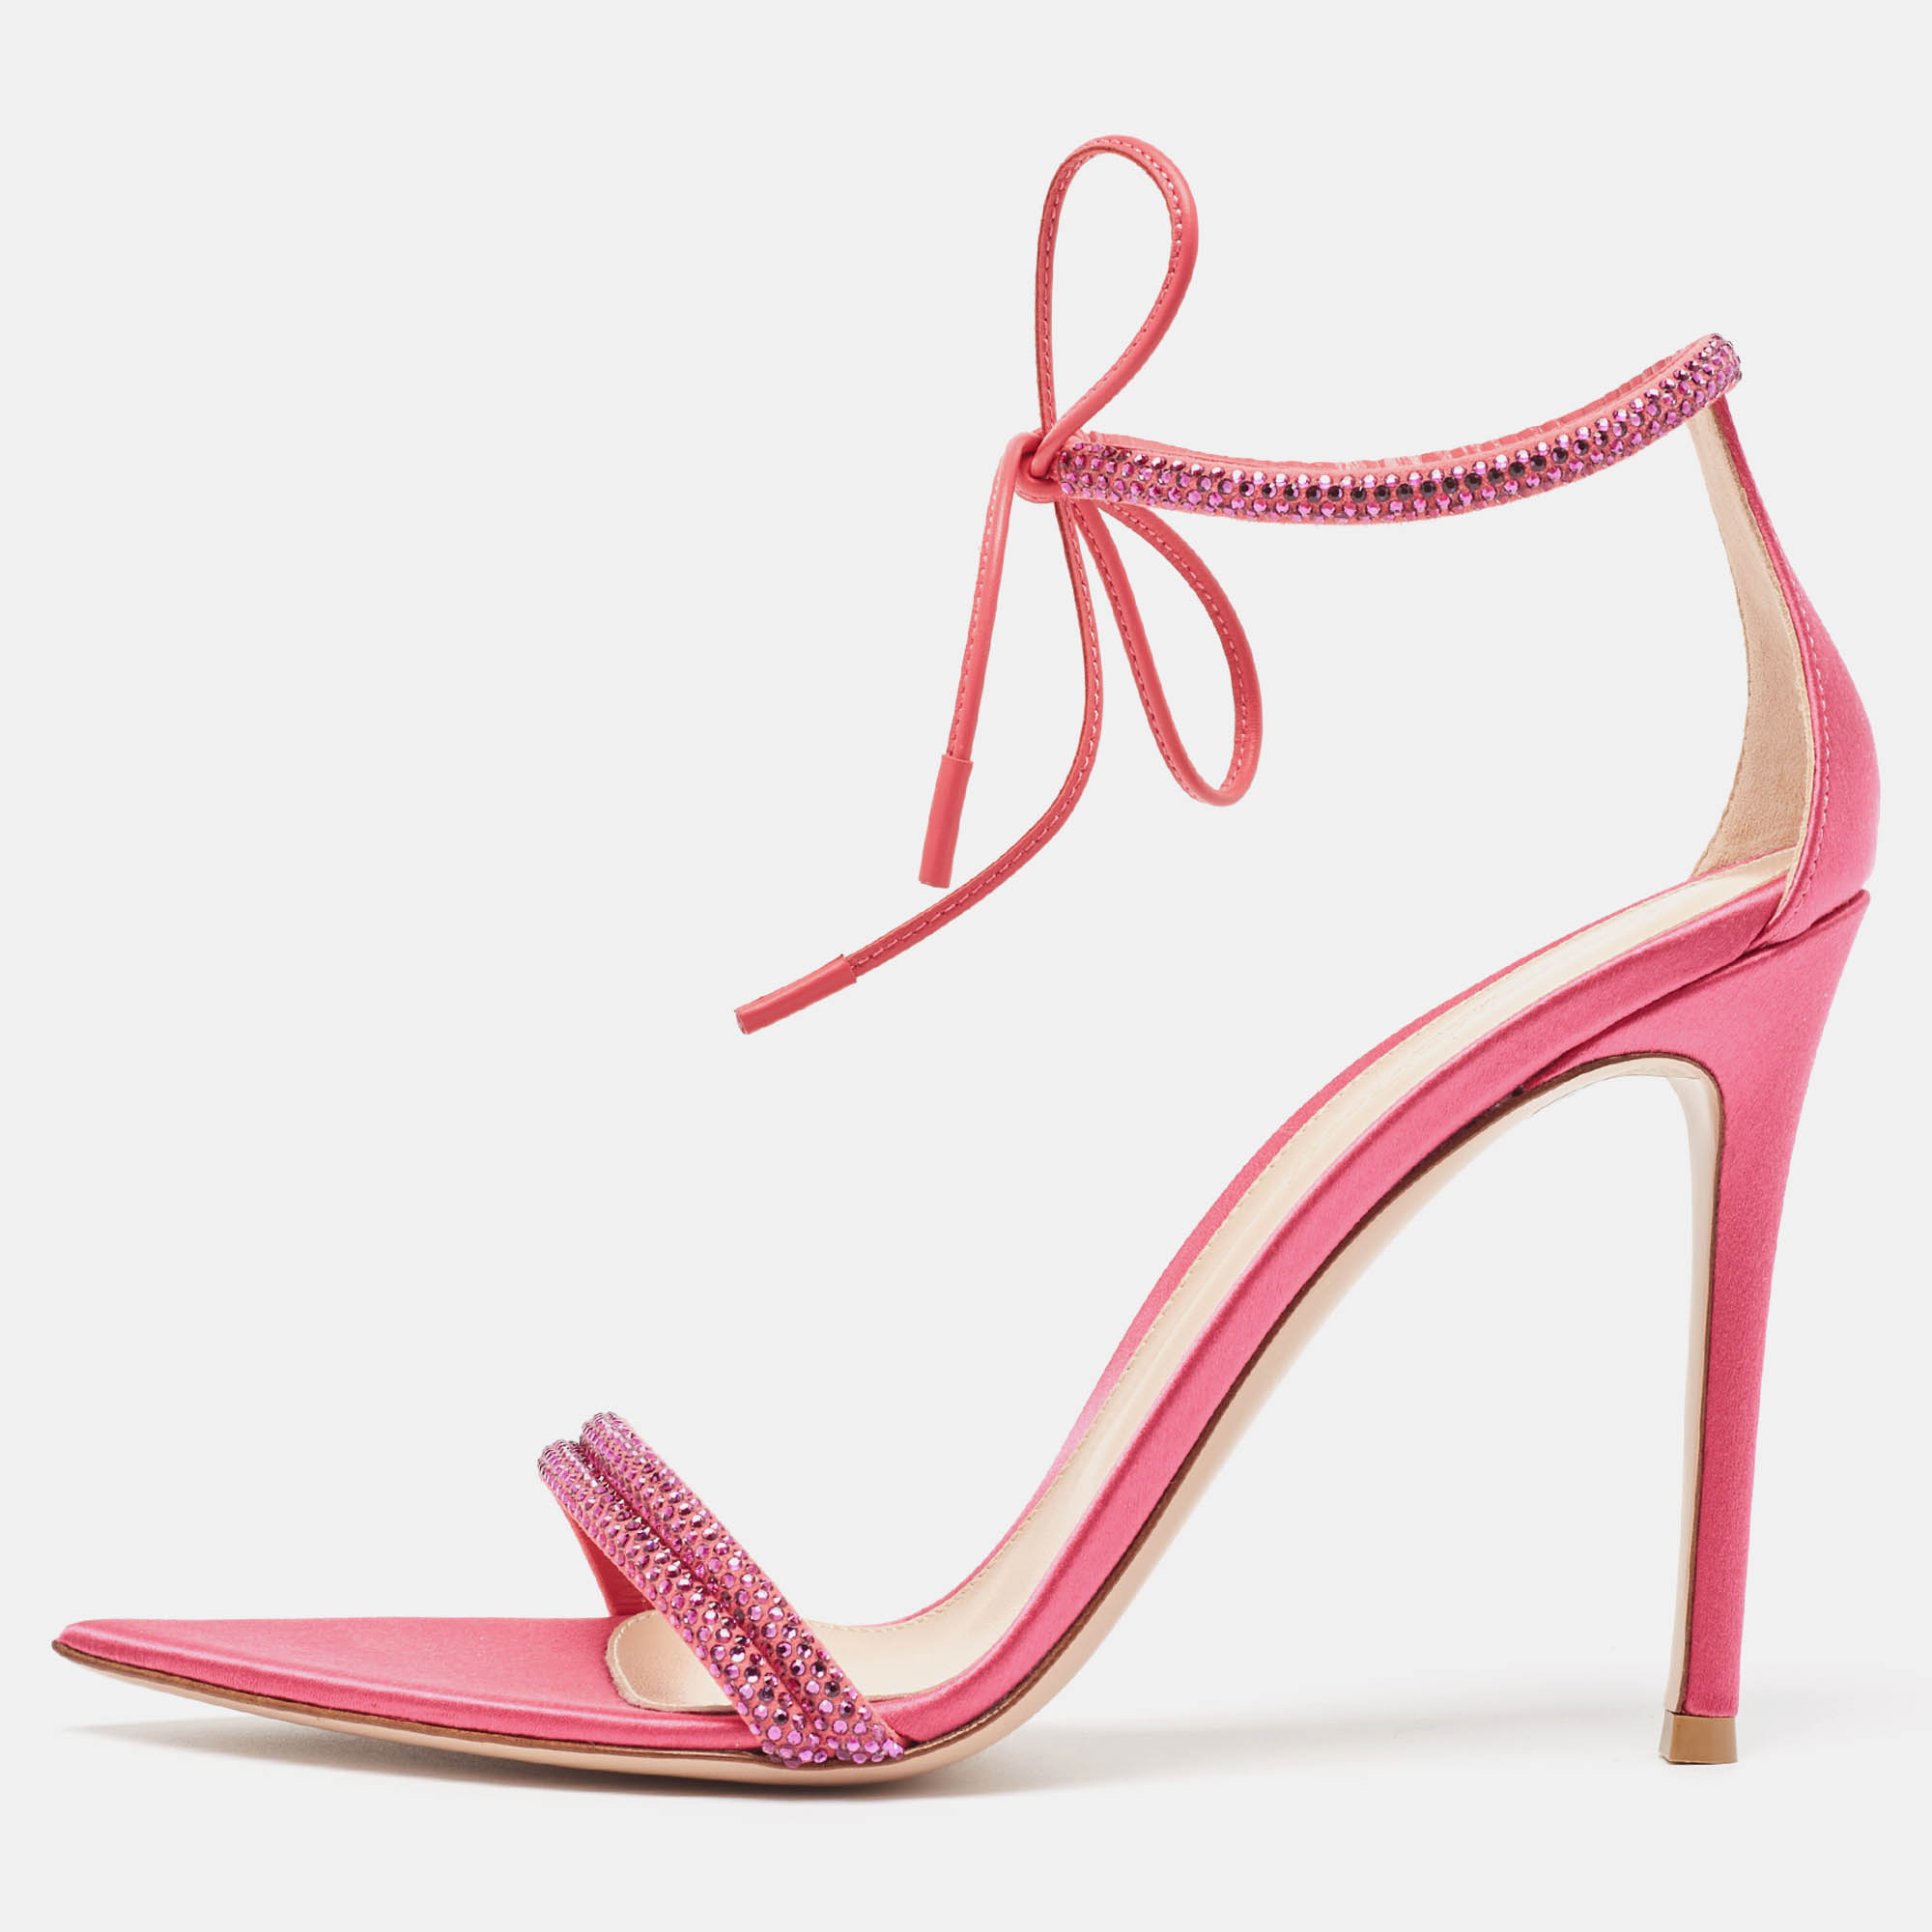 Gianvito rossi pink satin embellished montecarlo sandals size 39